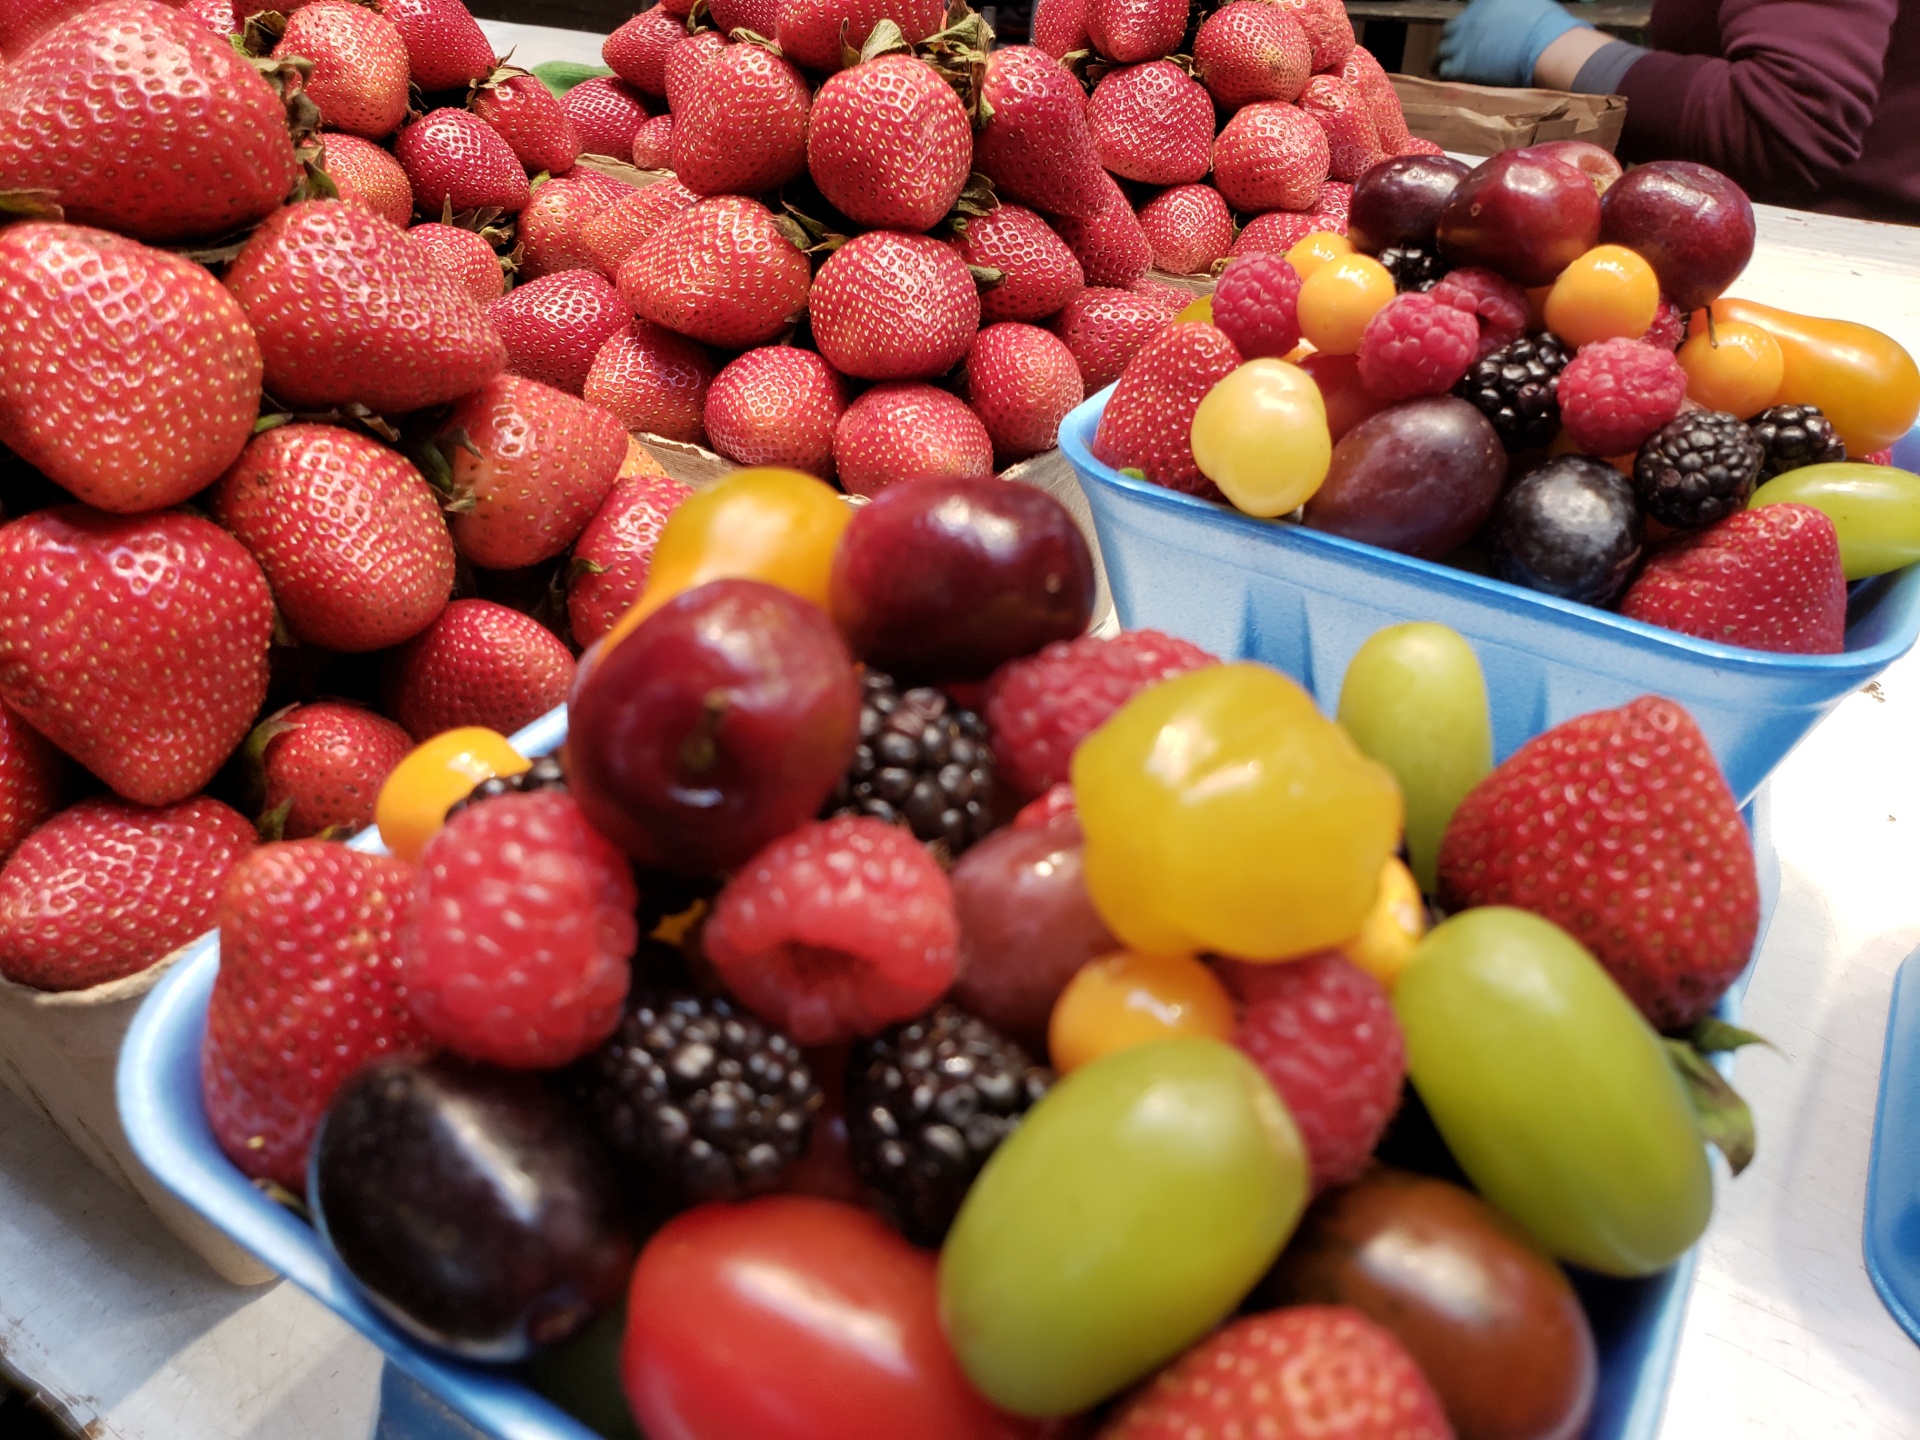 Fresh Fruit Baskets